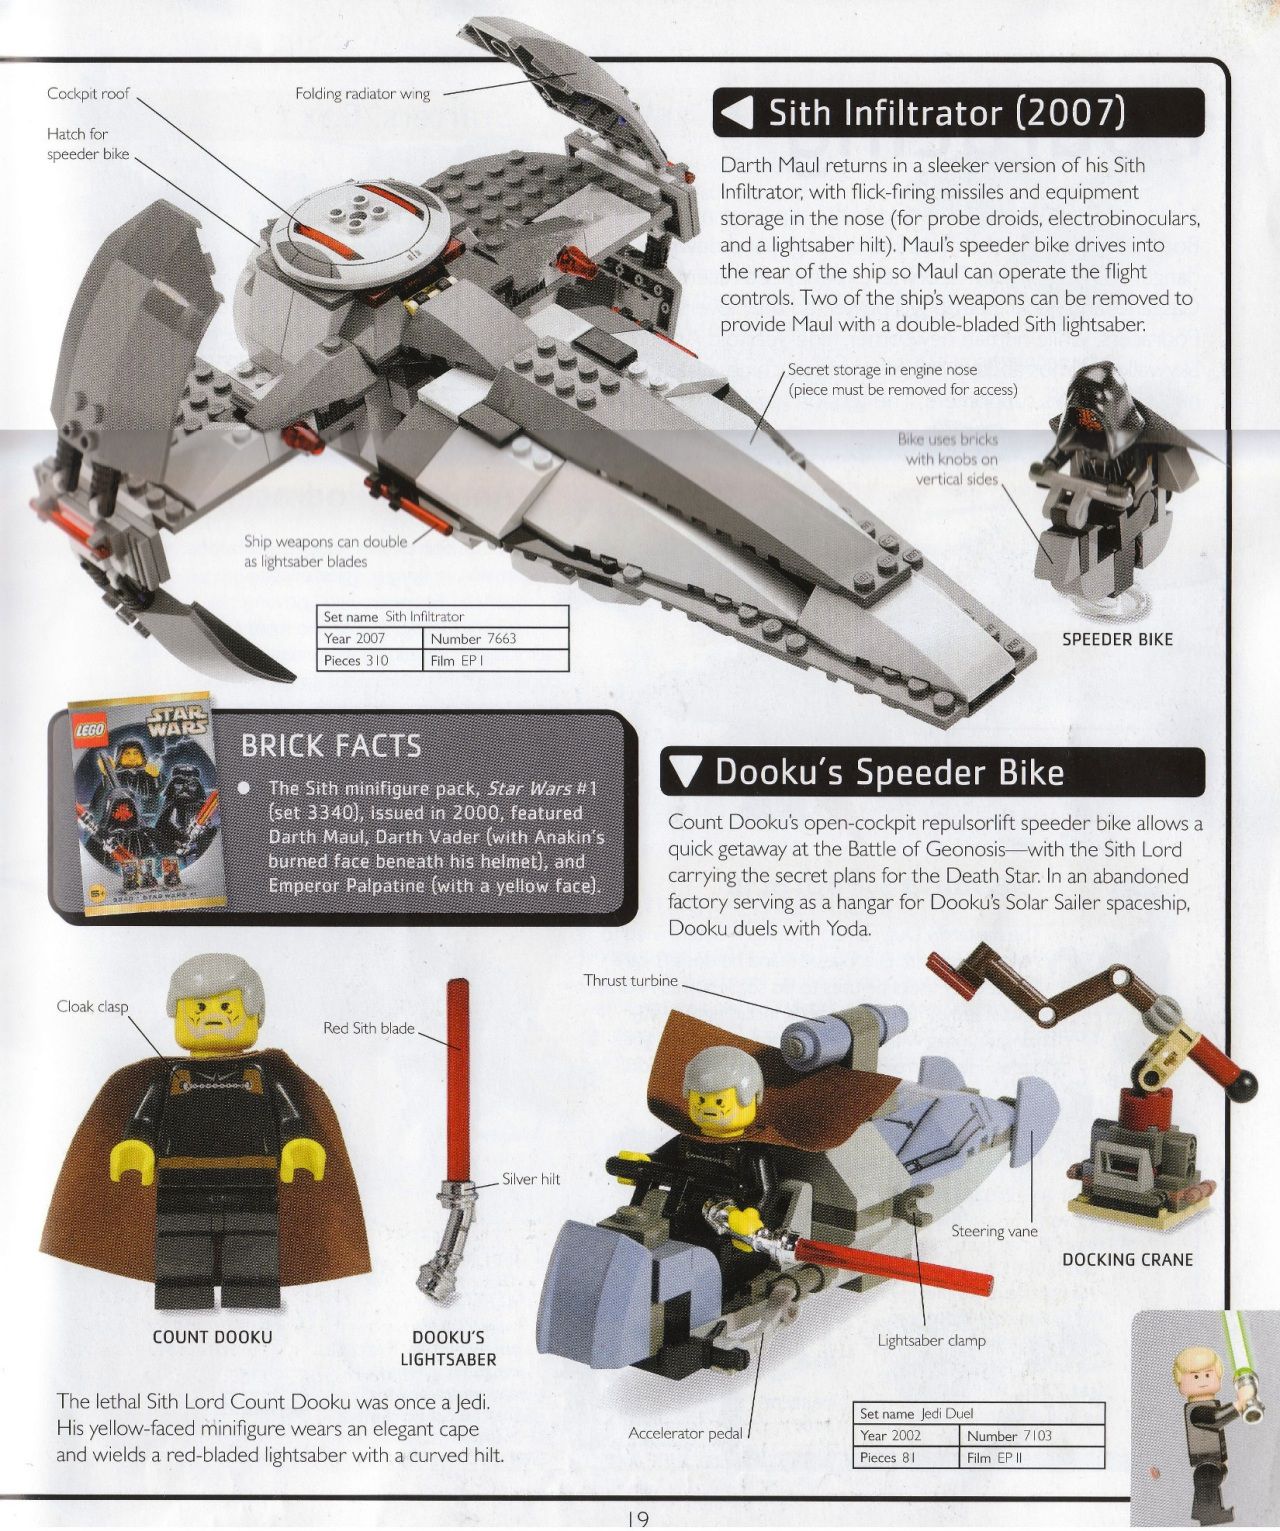 Lego Star Wars The Visual Dictionary 2009 Lego Star Wars The Visual Dictionary 2009 20